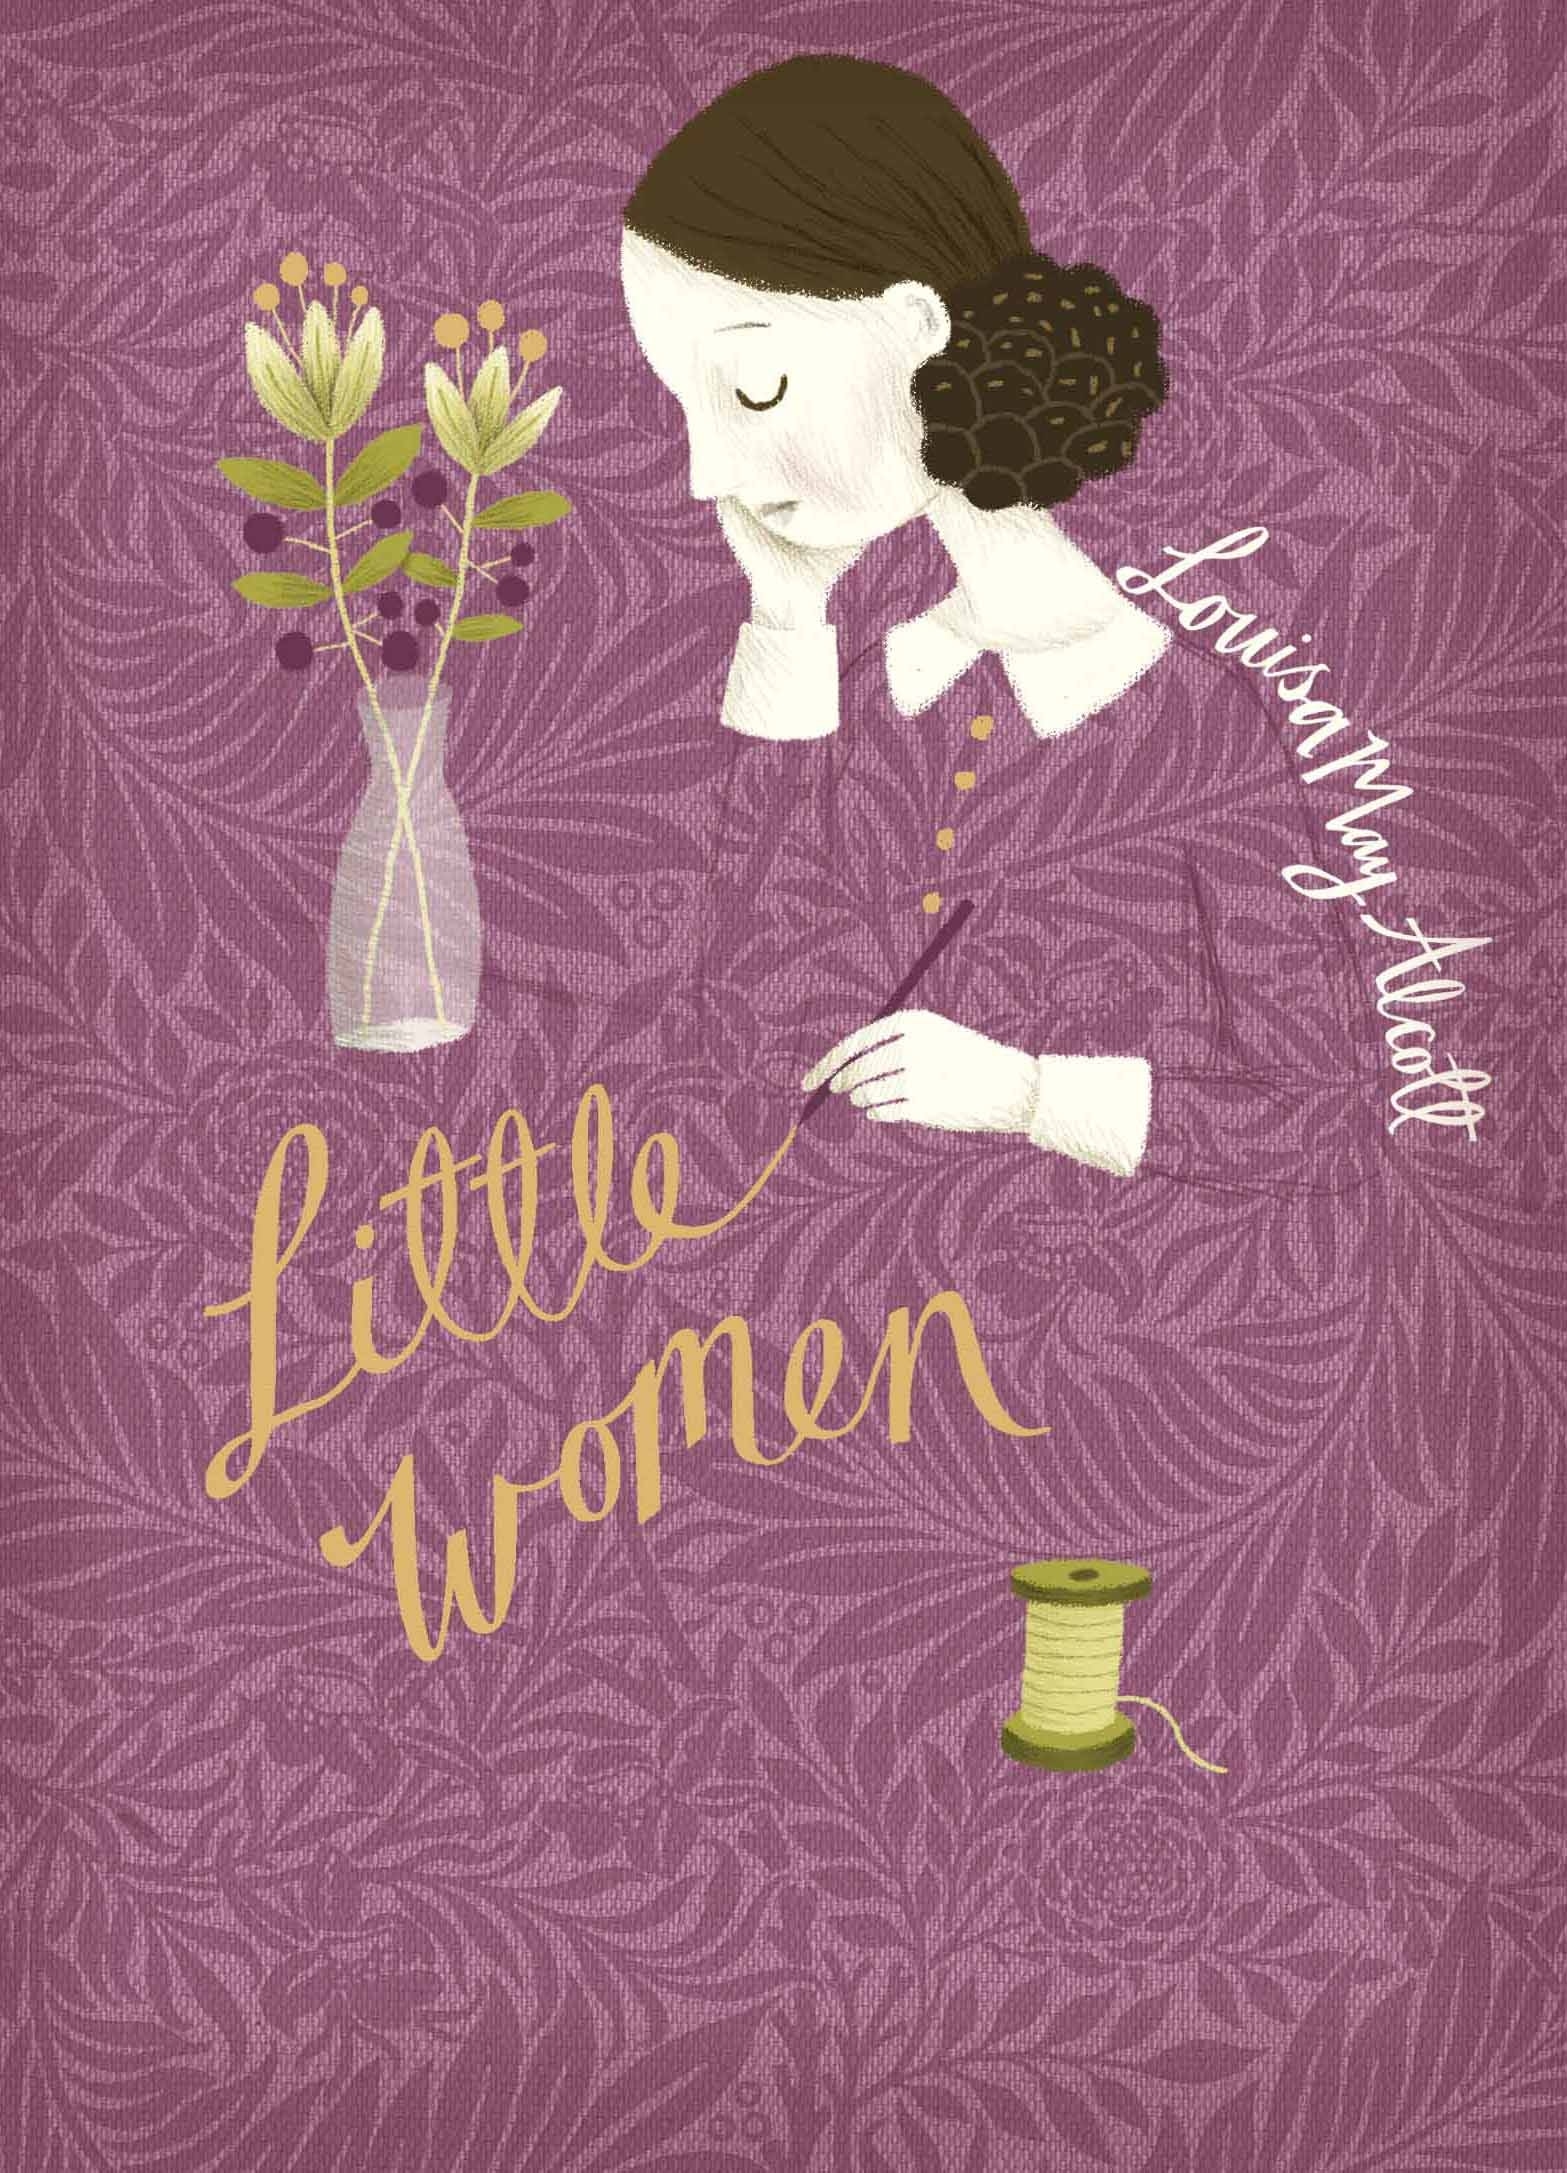 Book “Little Women” by Louisa May Alcott — May 4, 2017